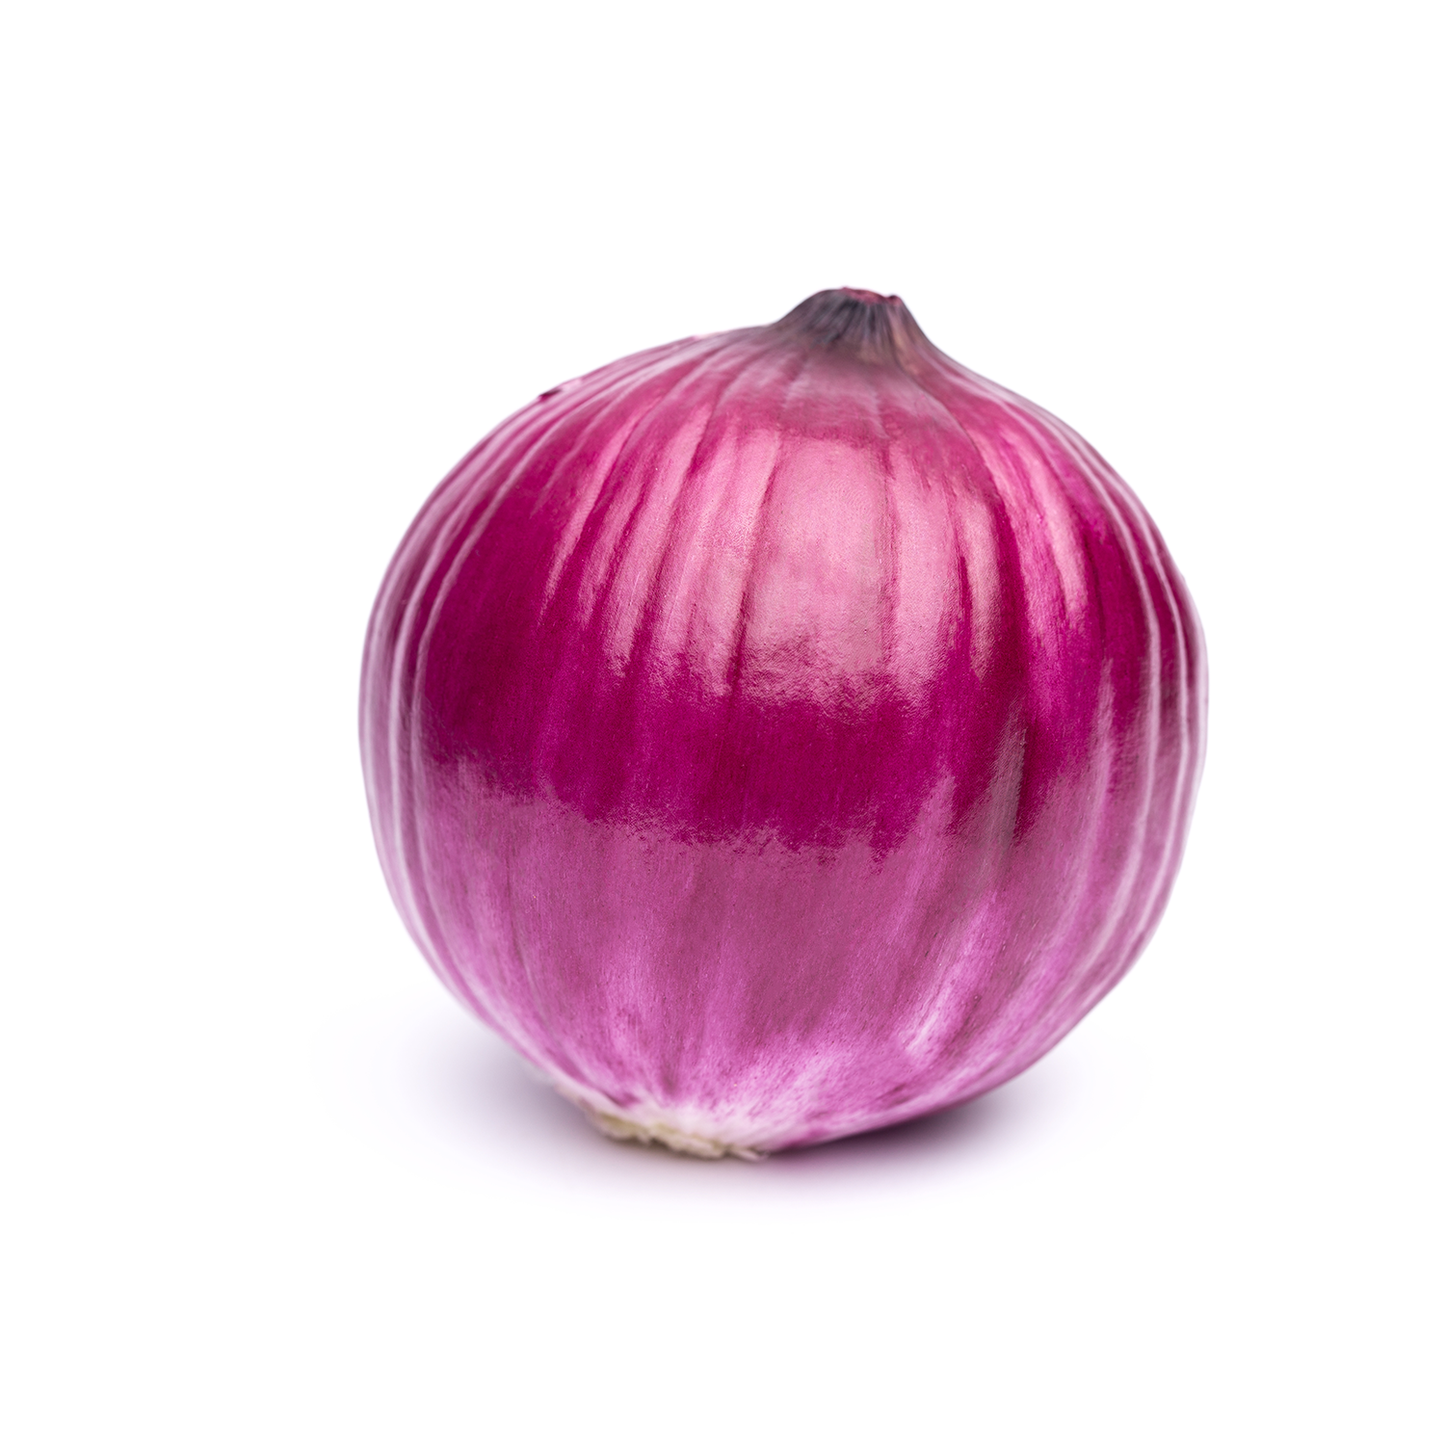 Red Onion (jumbo) / 1 pc